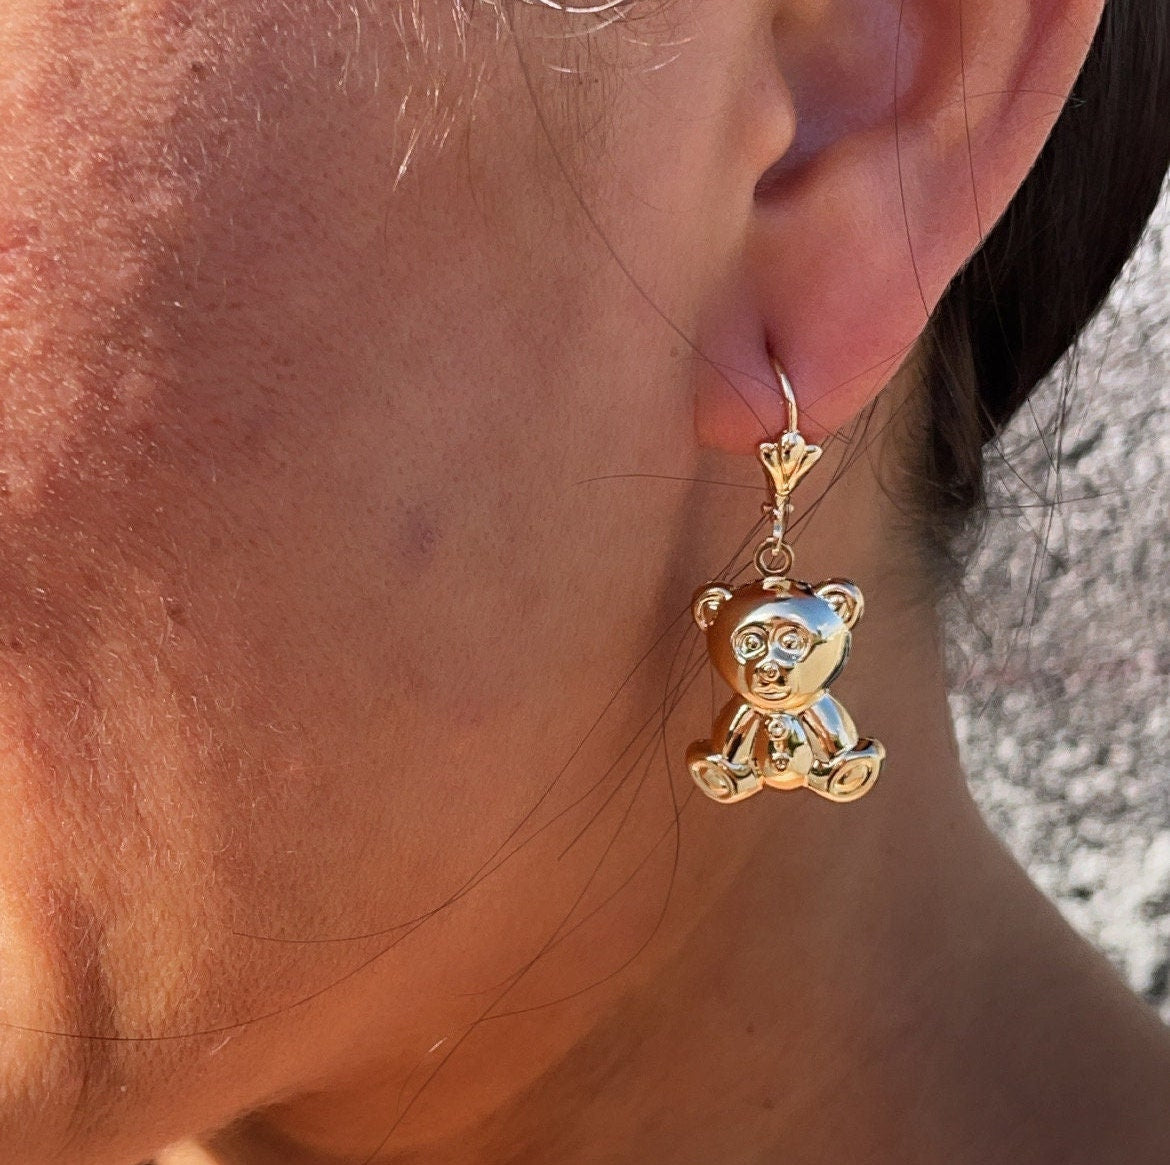 18k Gold Layered Chubby Teddy Bear Dangling Earrings Wholesale Jewelry Making